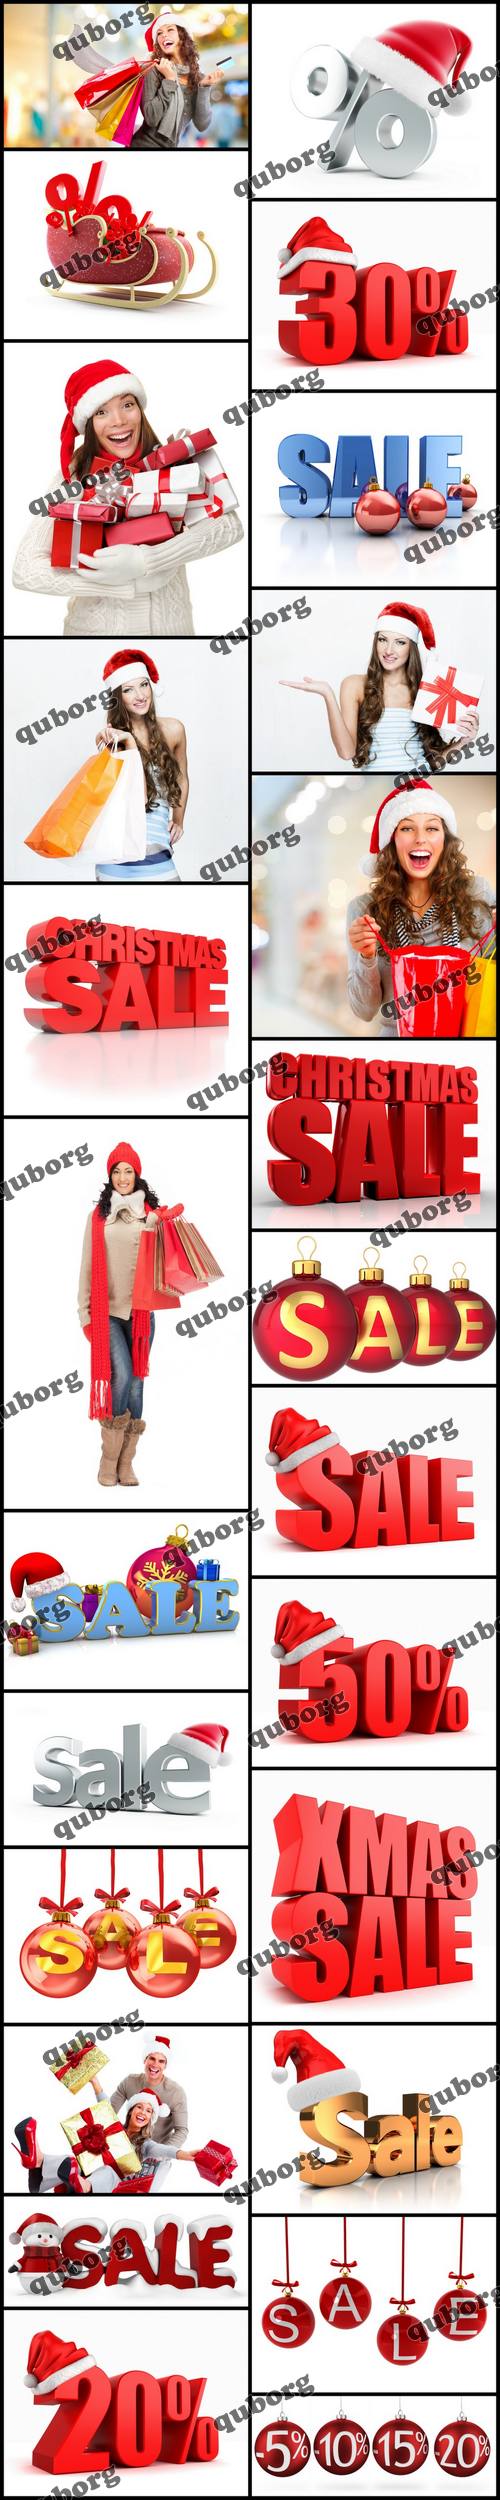 Stock Photos - Christmas Sale